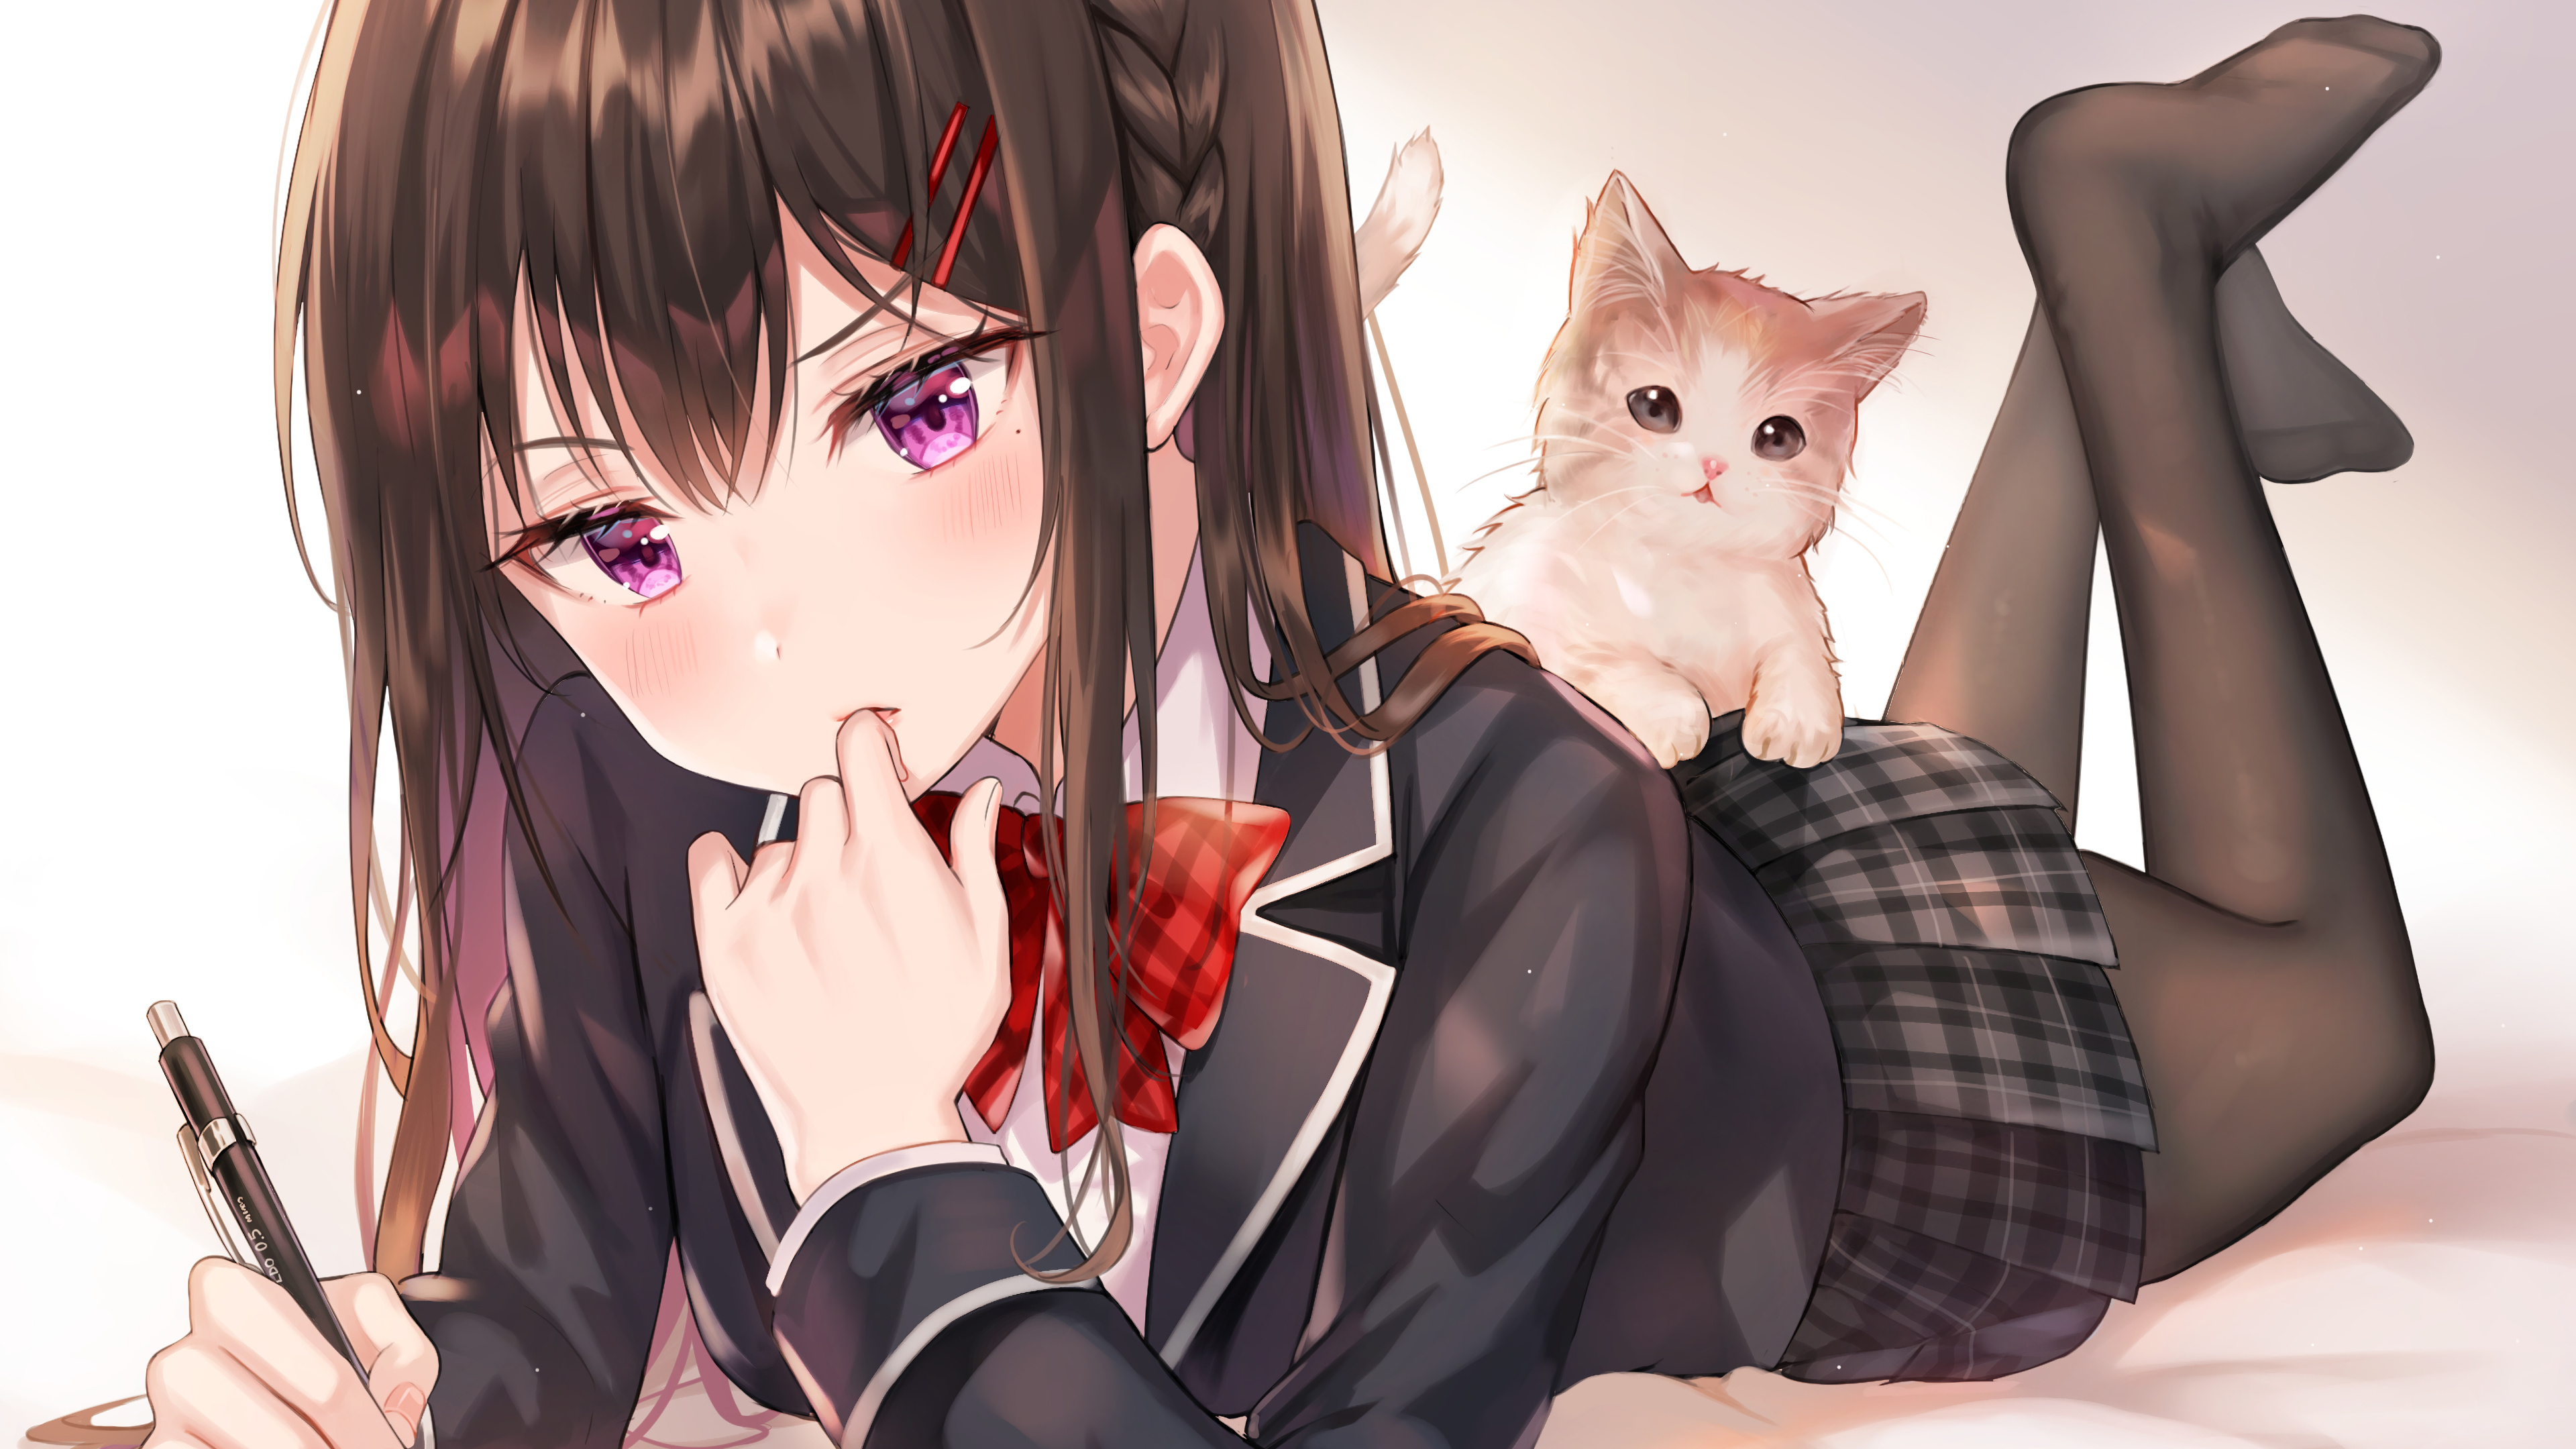 Anime Girl Studying Student Uniform Cute Cat 4k Wallpaper